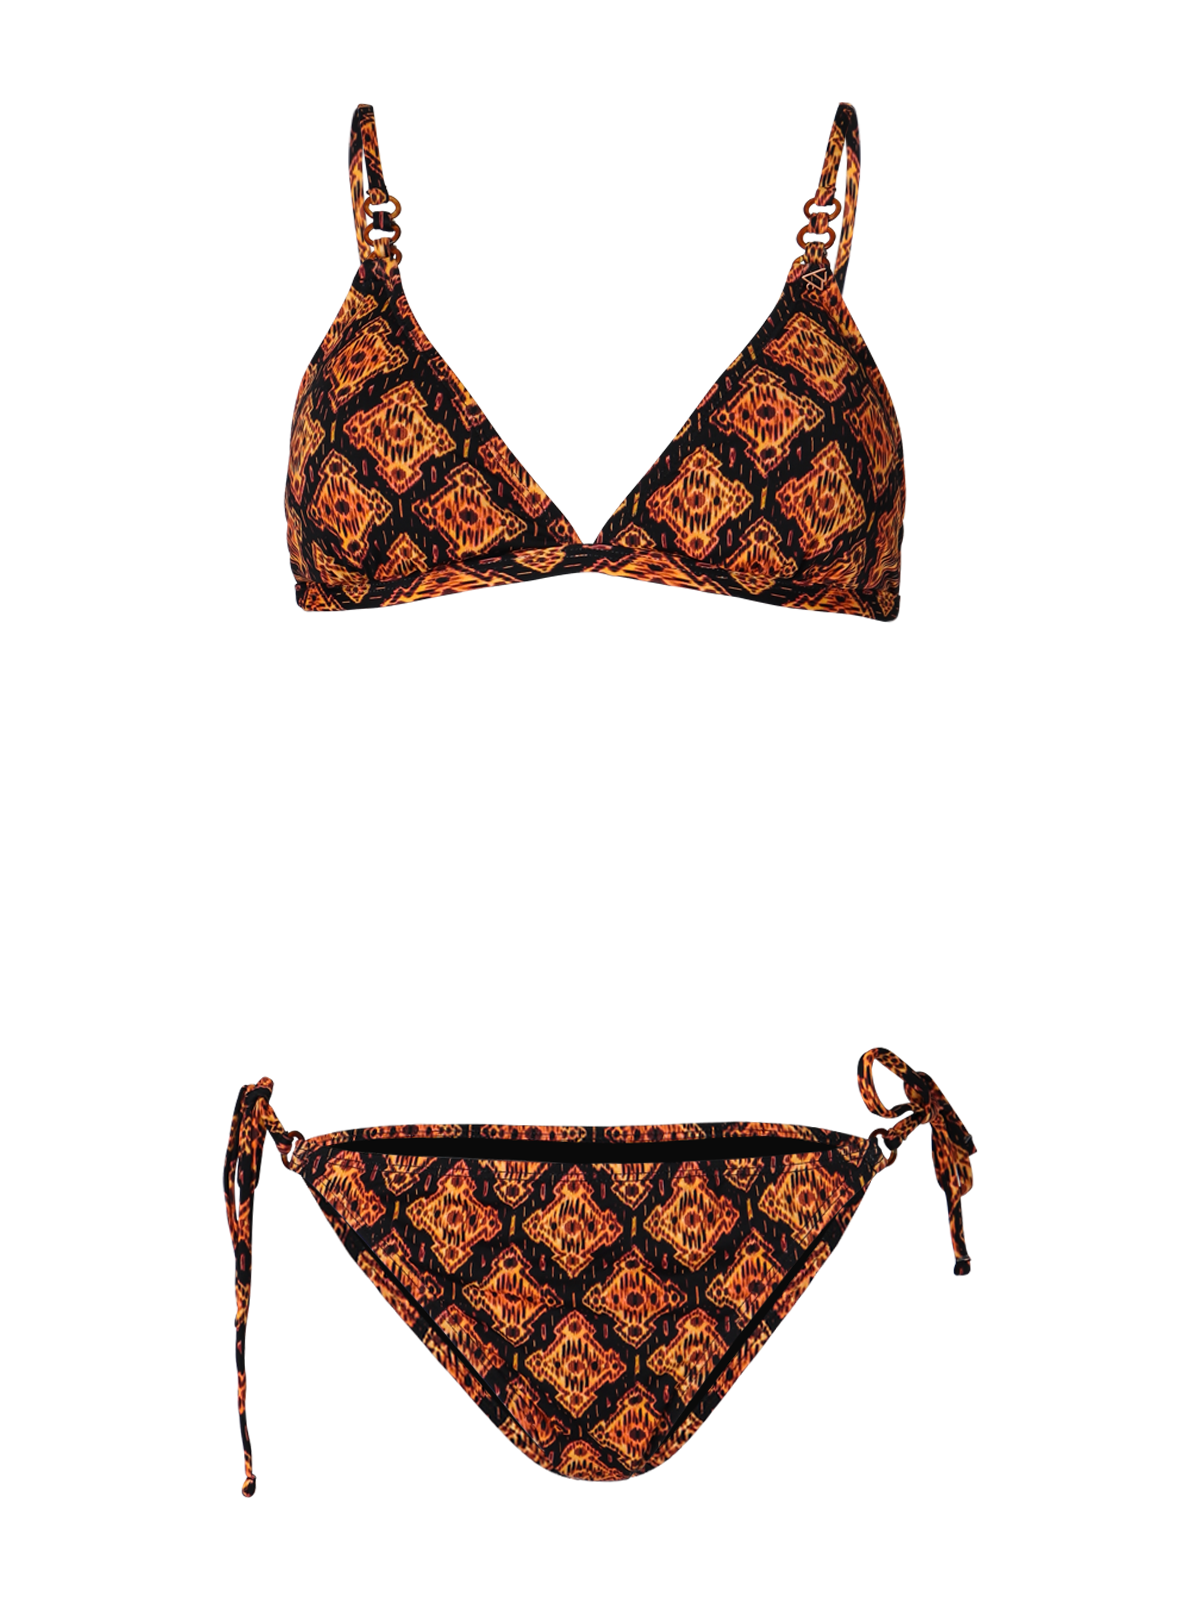 Maringi Women Triangle Bikini | Black